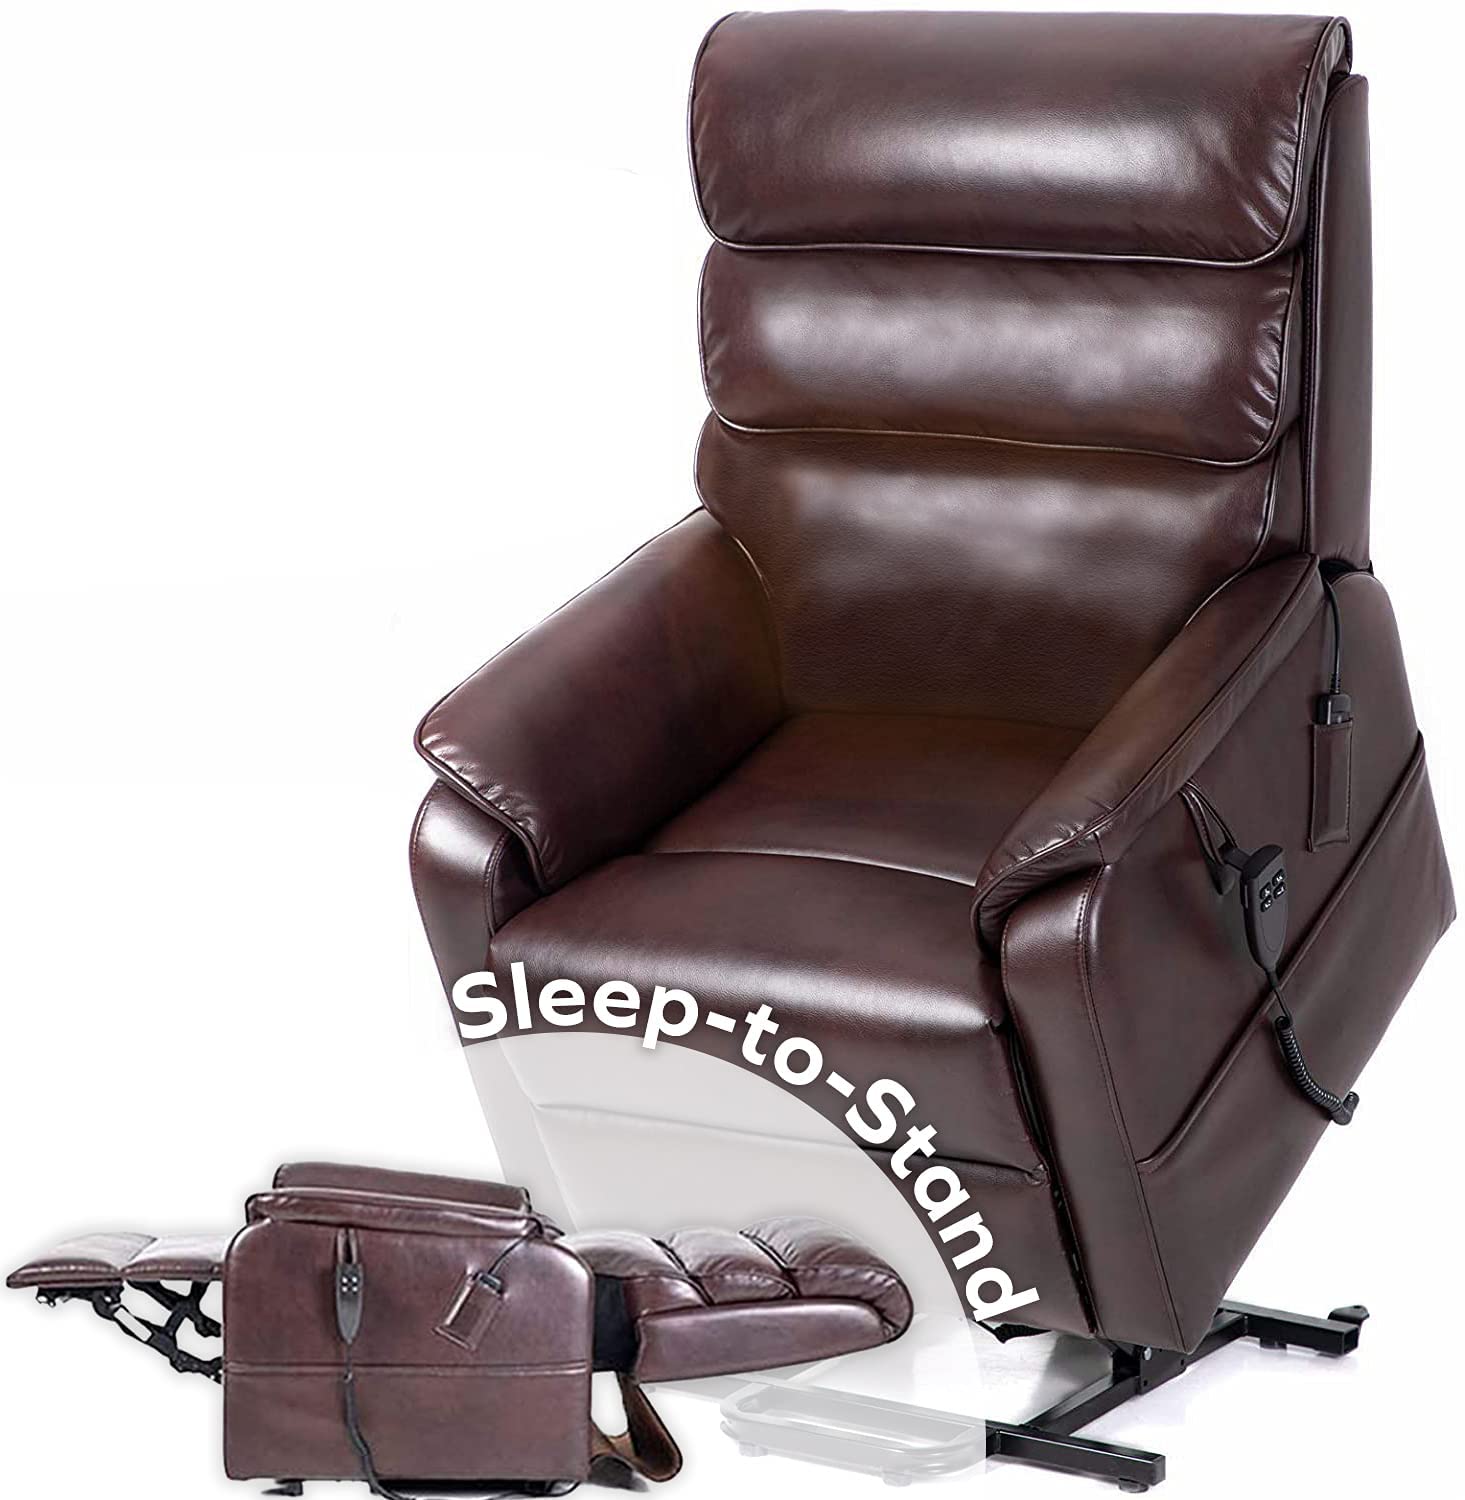 FirstClass Sleep-to-Stand Lift Chair - Platinum Health Group